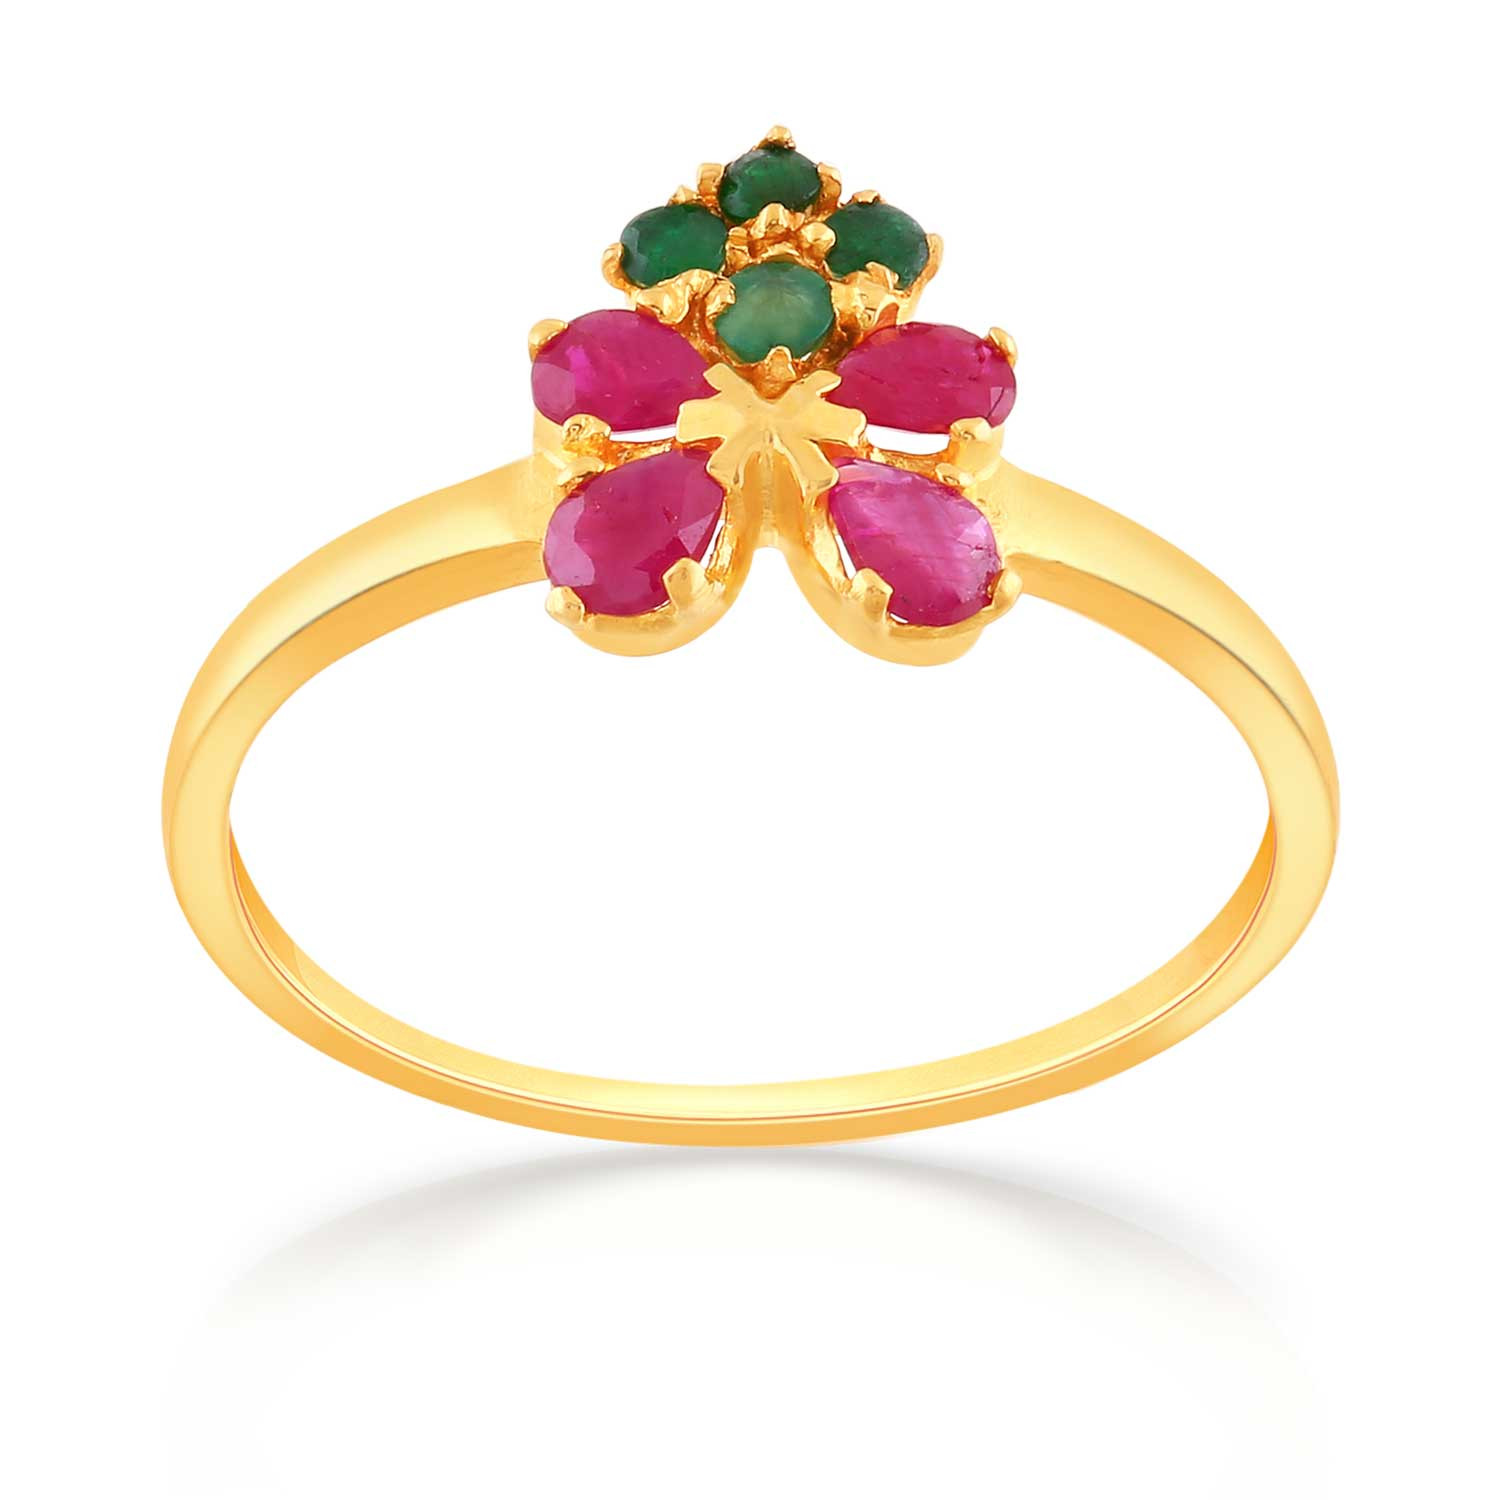 Buy Yellow Gold & Green Rings for Women by Malabar Gold & Diamonds Online |  Ajio.com